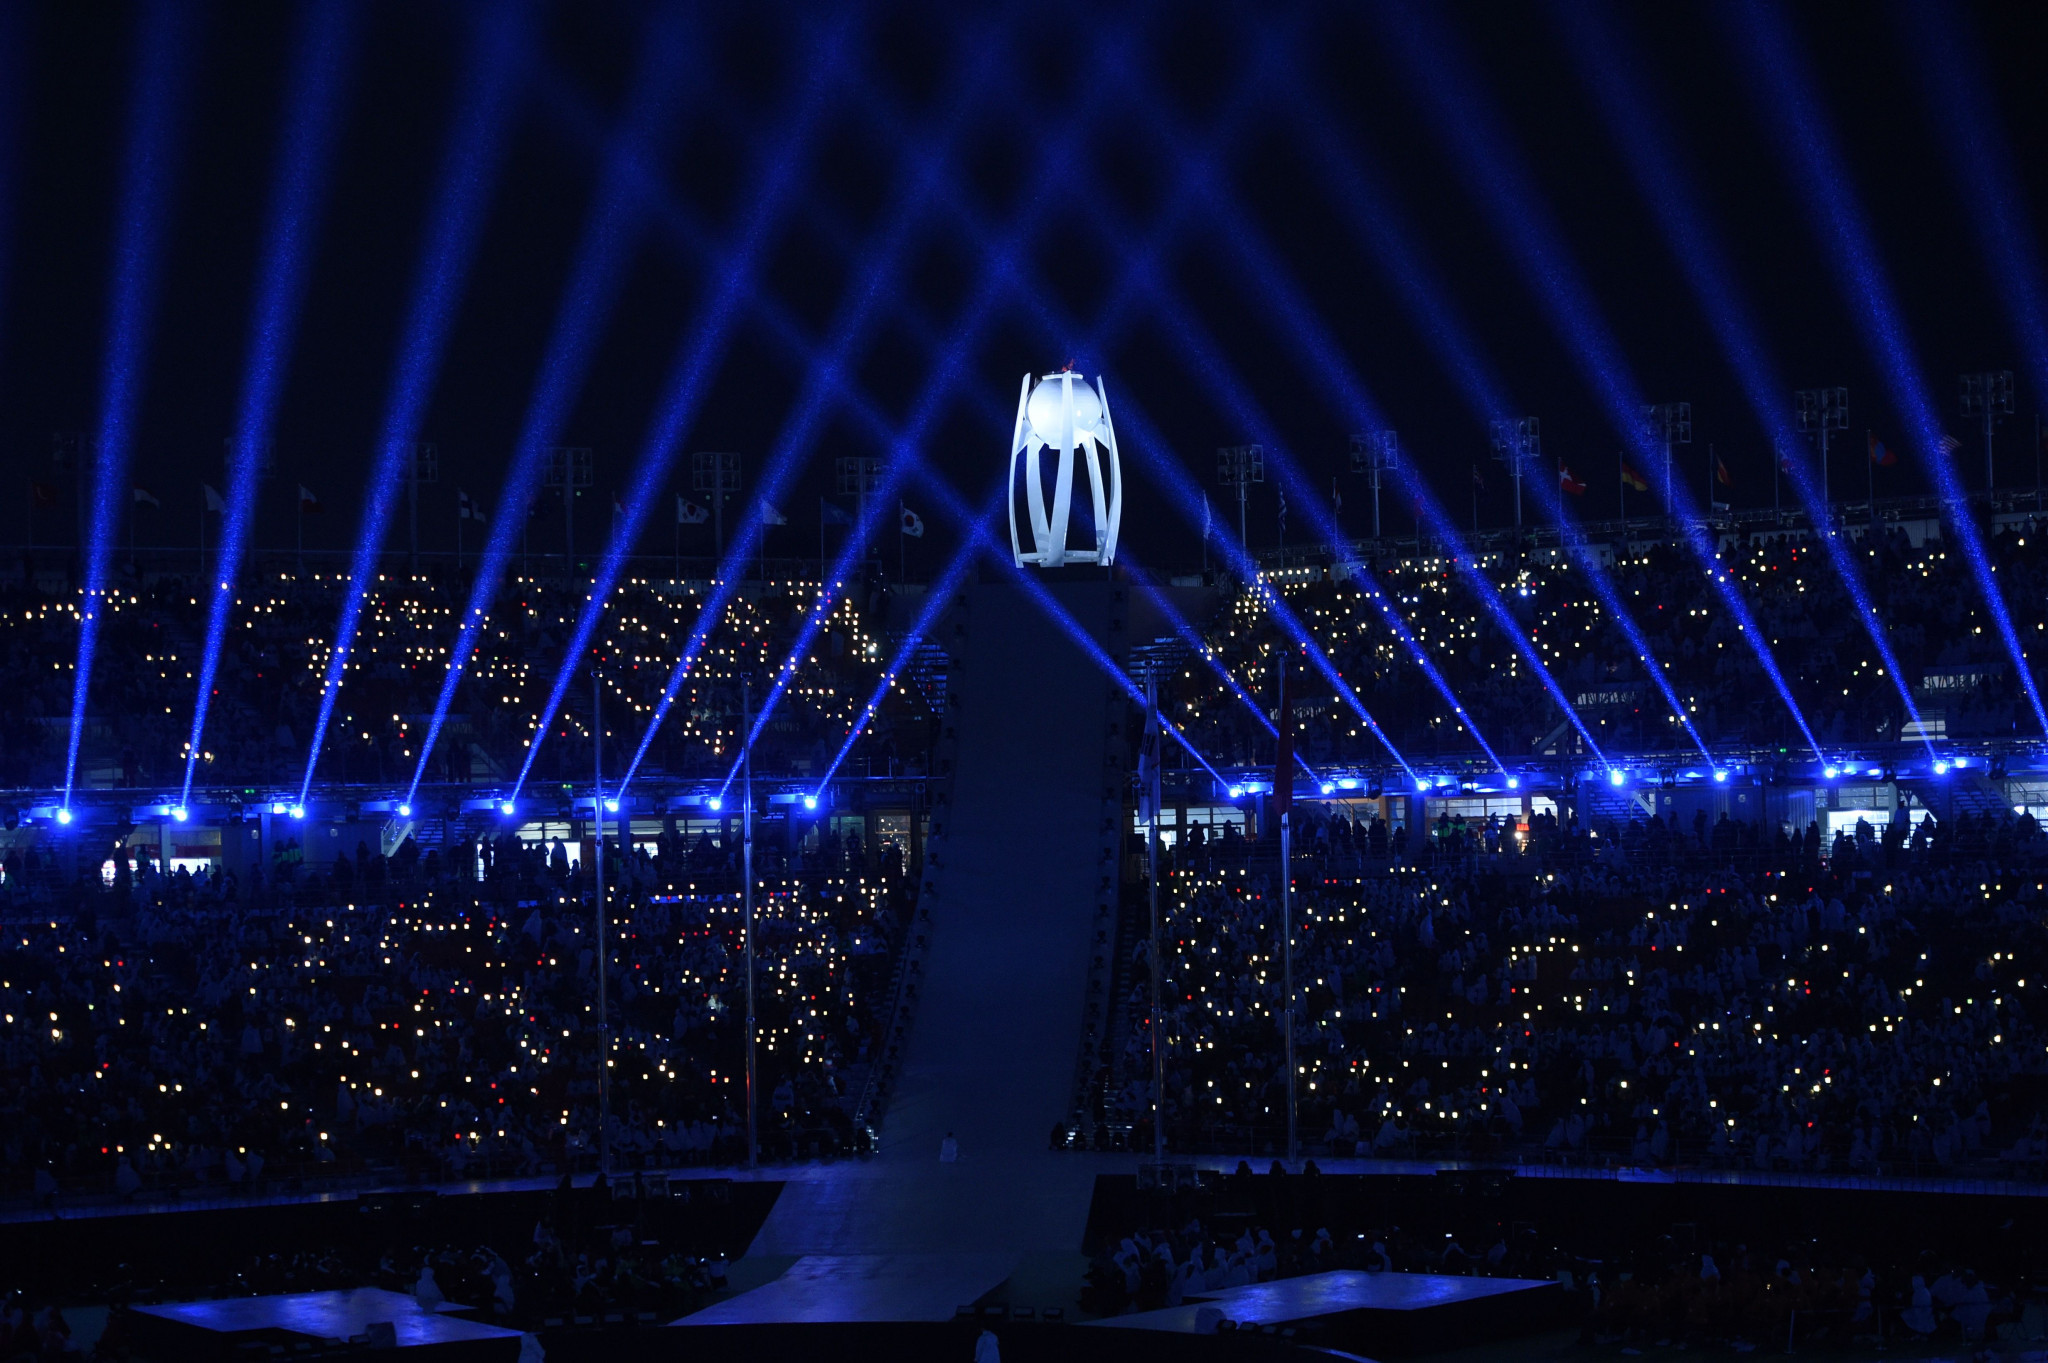 Pyeongchang 2018: Closing Ceremony